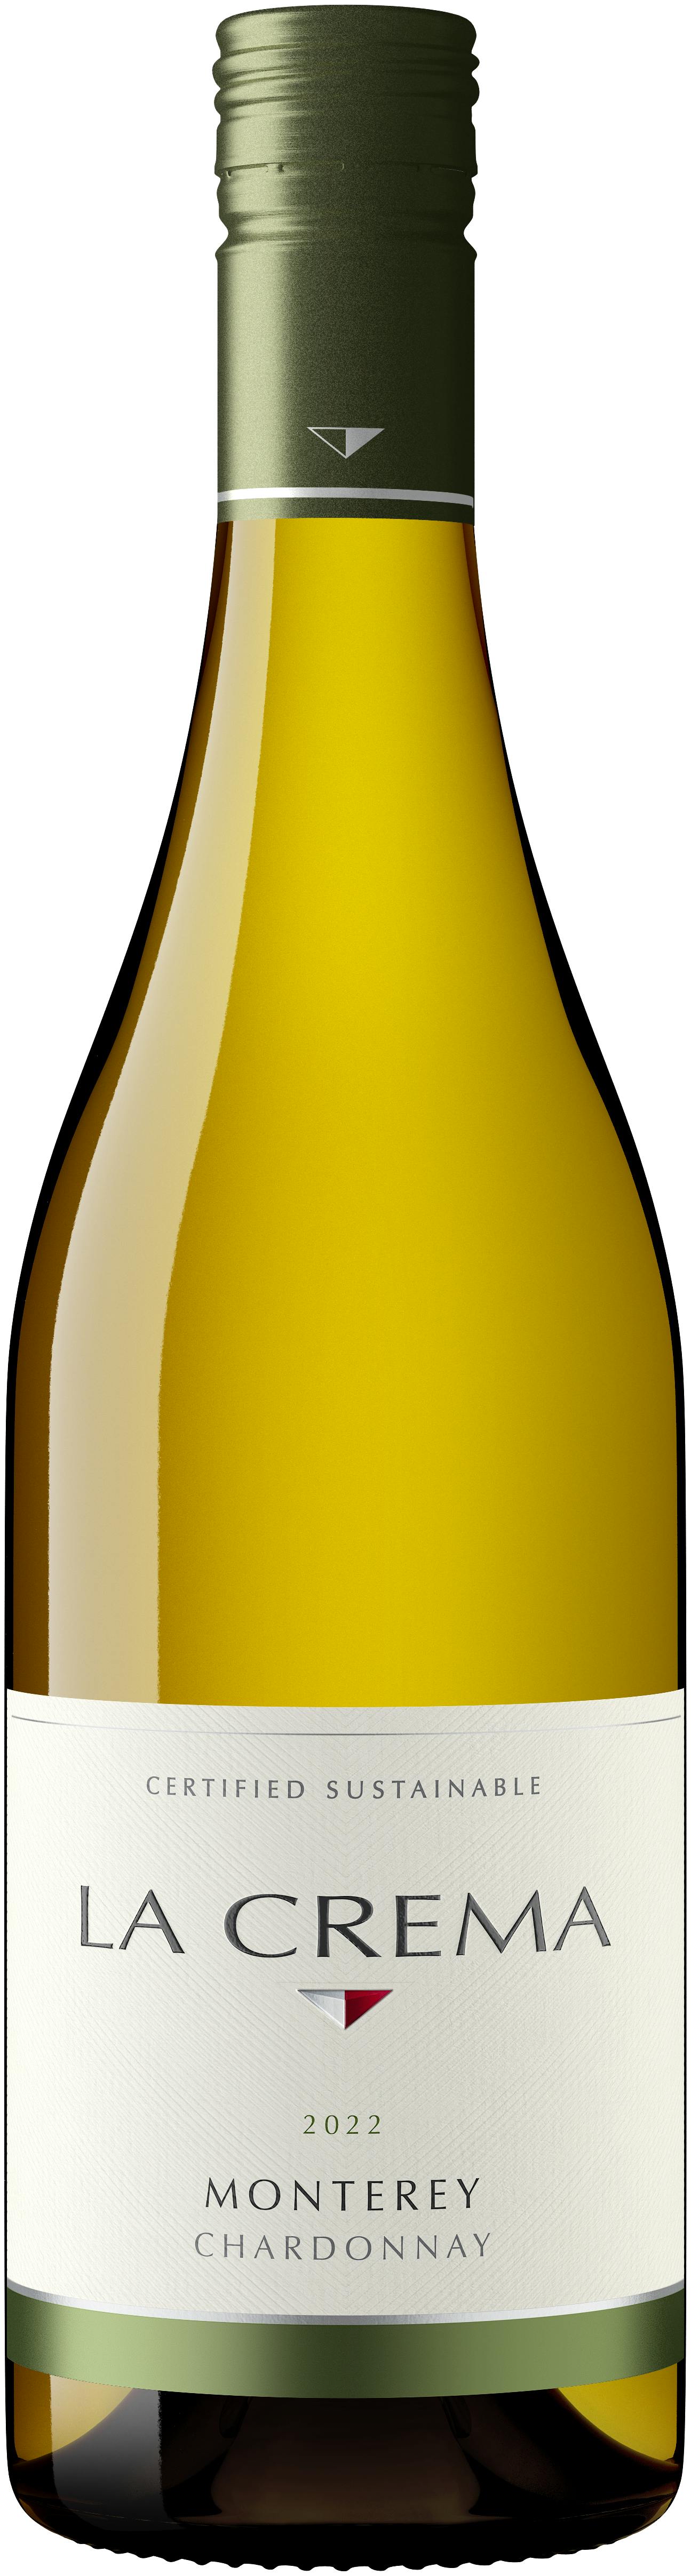 White Wine - Wine - Wine Liquor - California - Coast - - - Chardonnay 2022 & sustainable - Crema La Central Warehouse